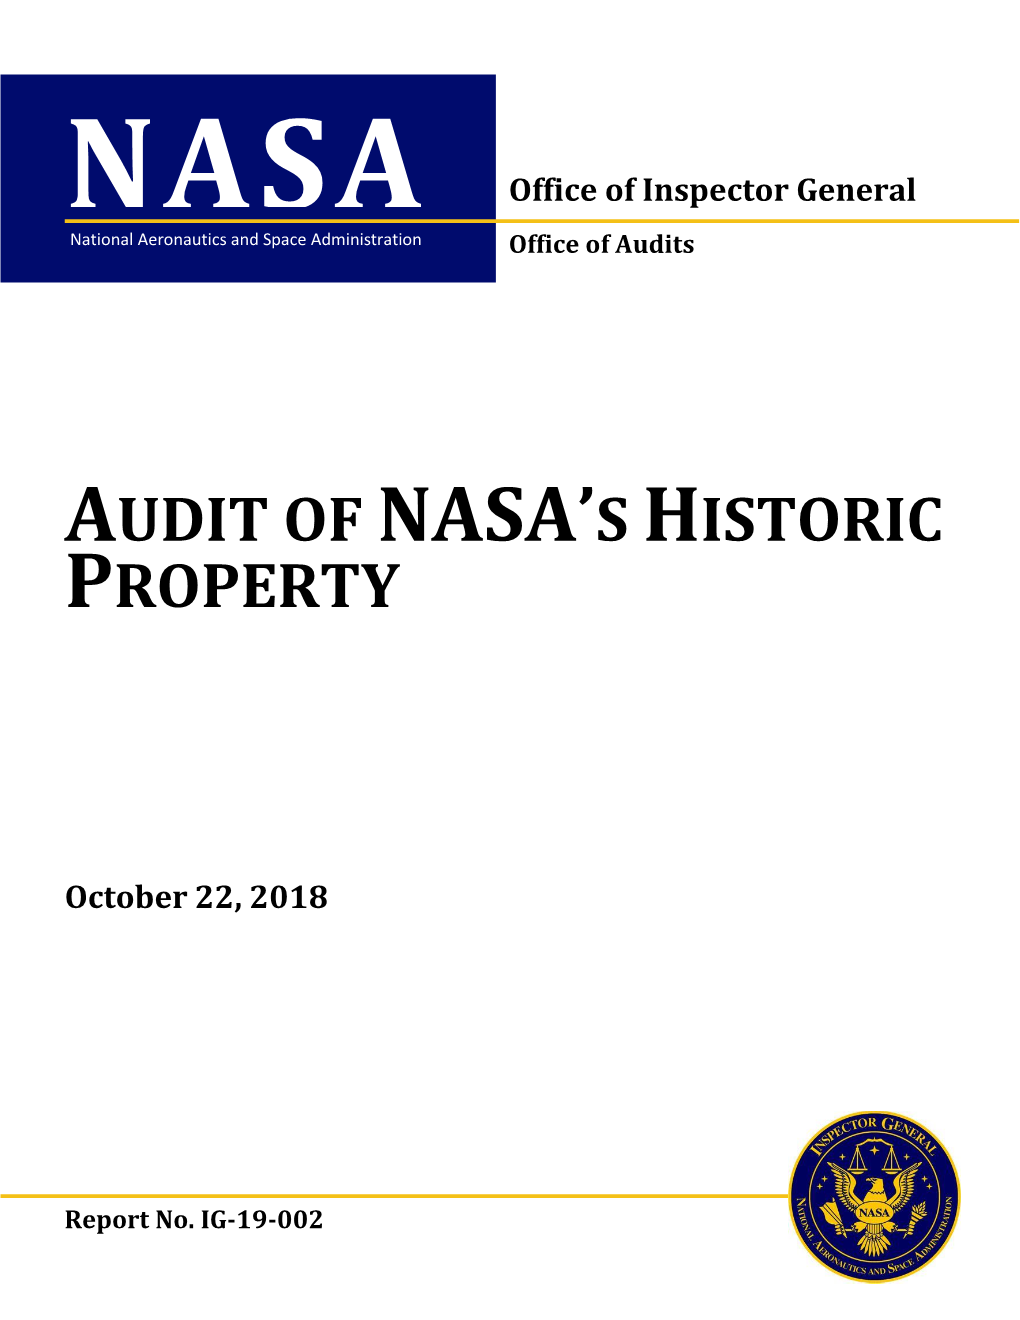 Audit of NASA's Historic Property (IG-19-002)